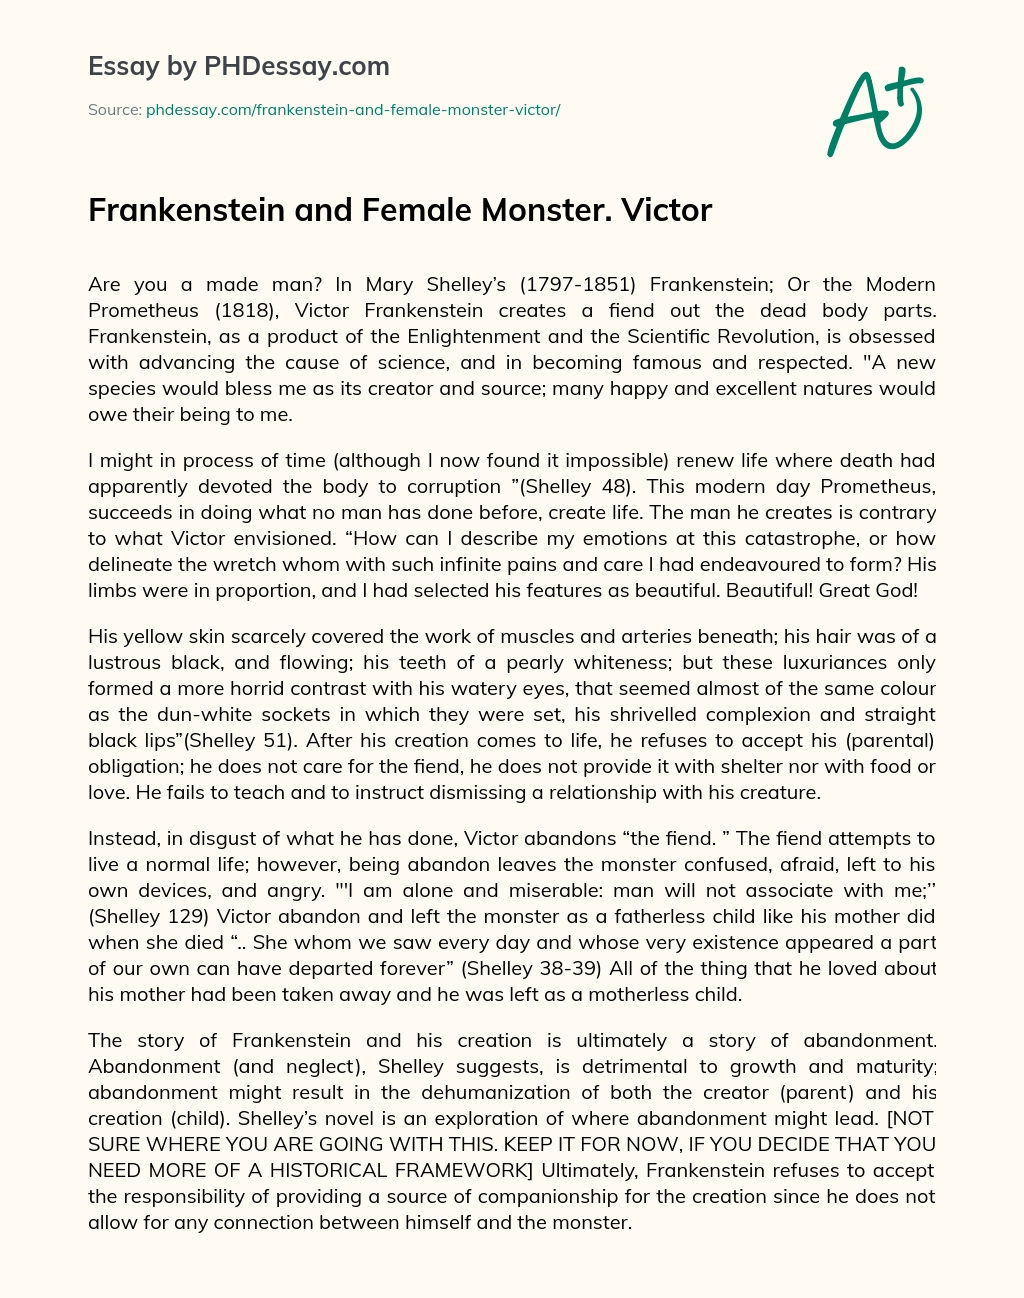 Frankenstein and Female Monster. Victor essay